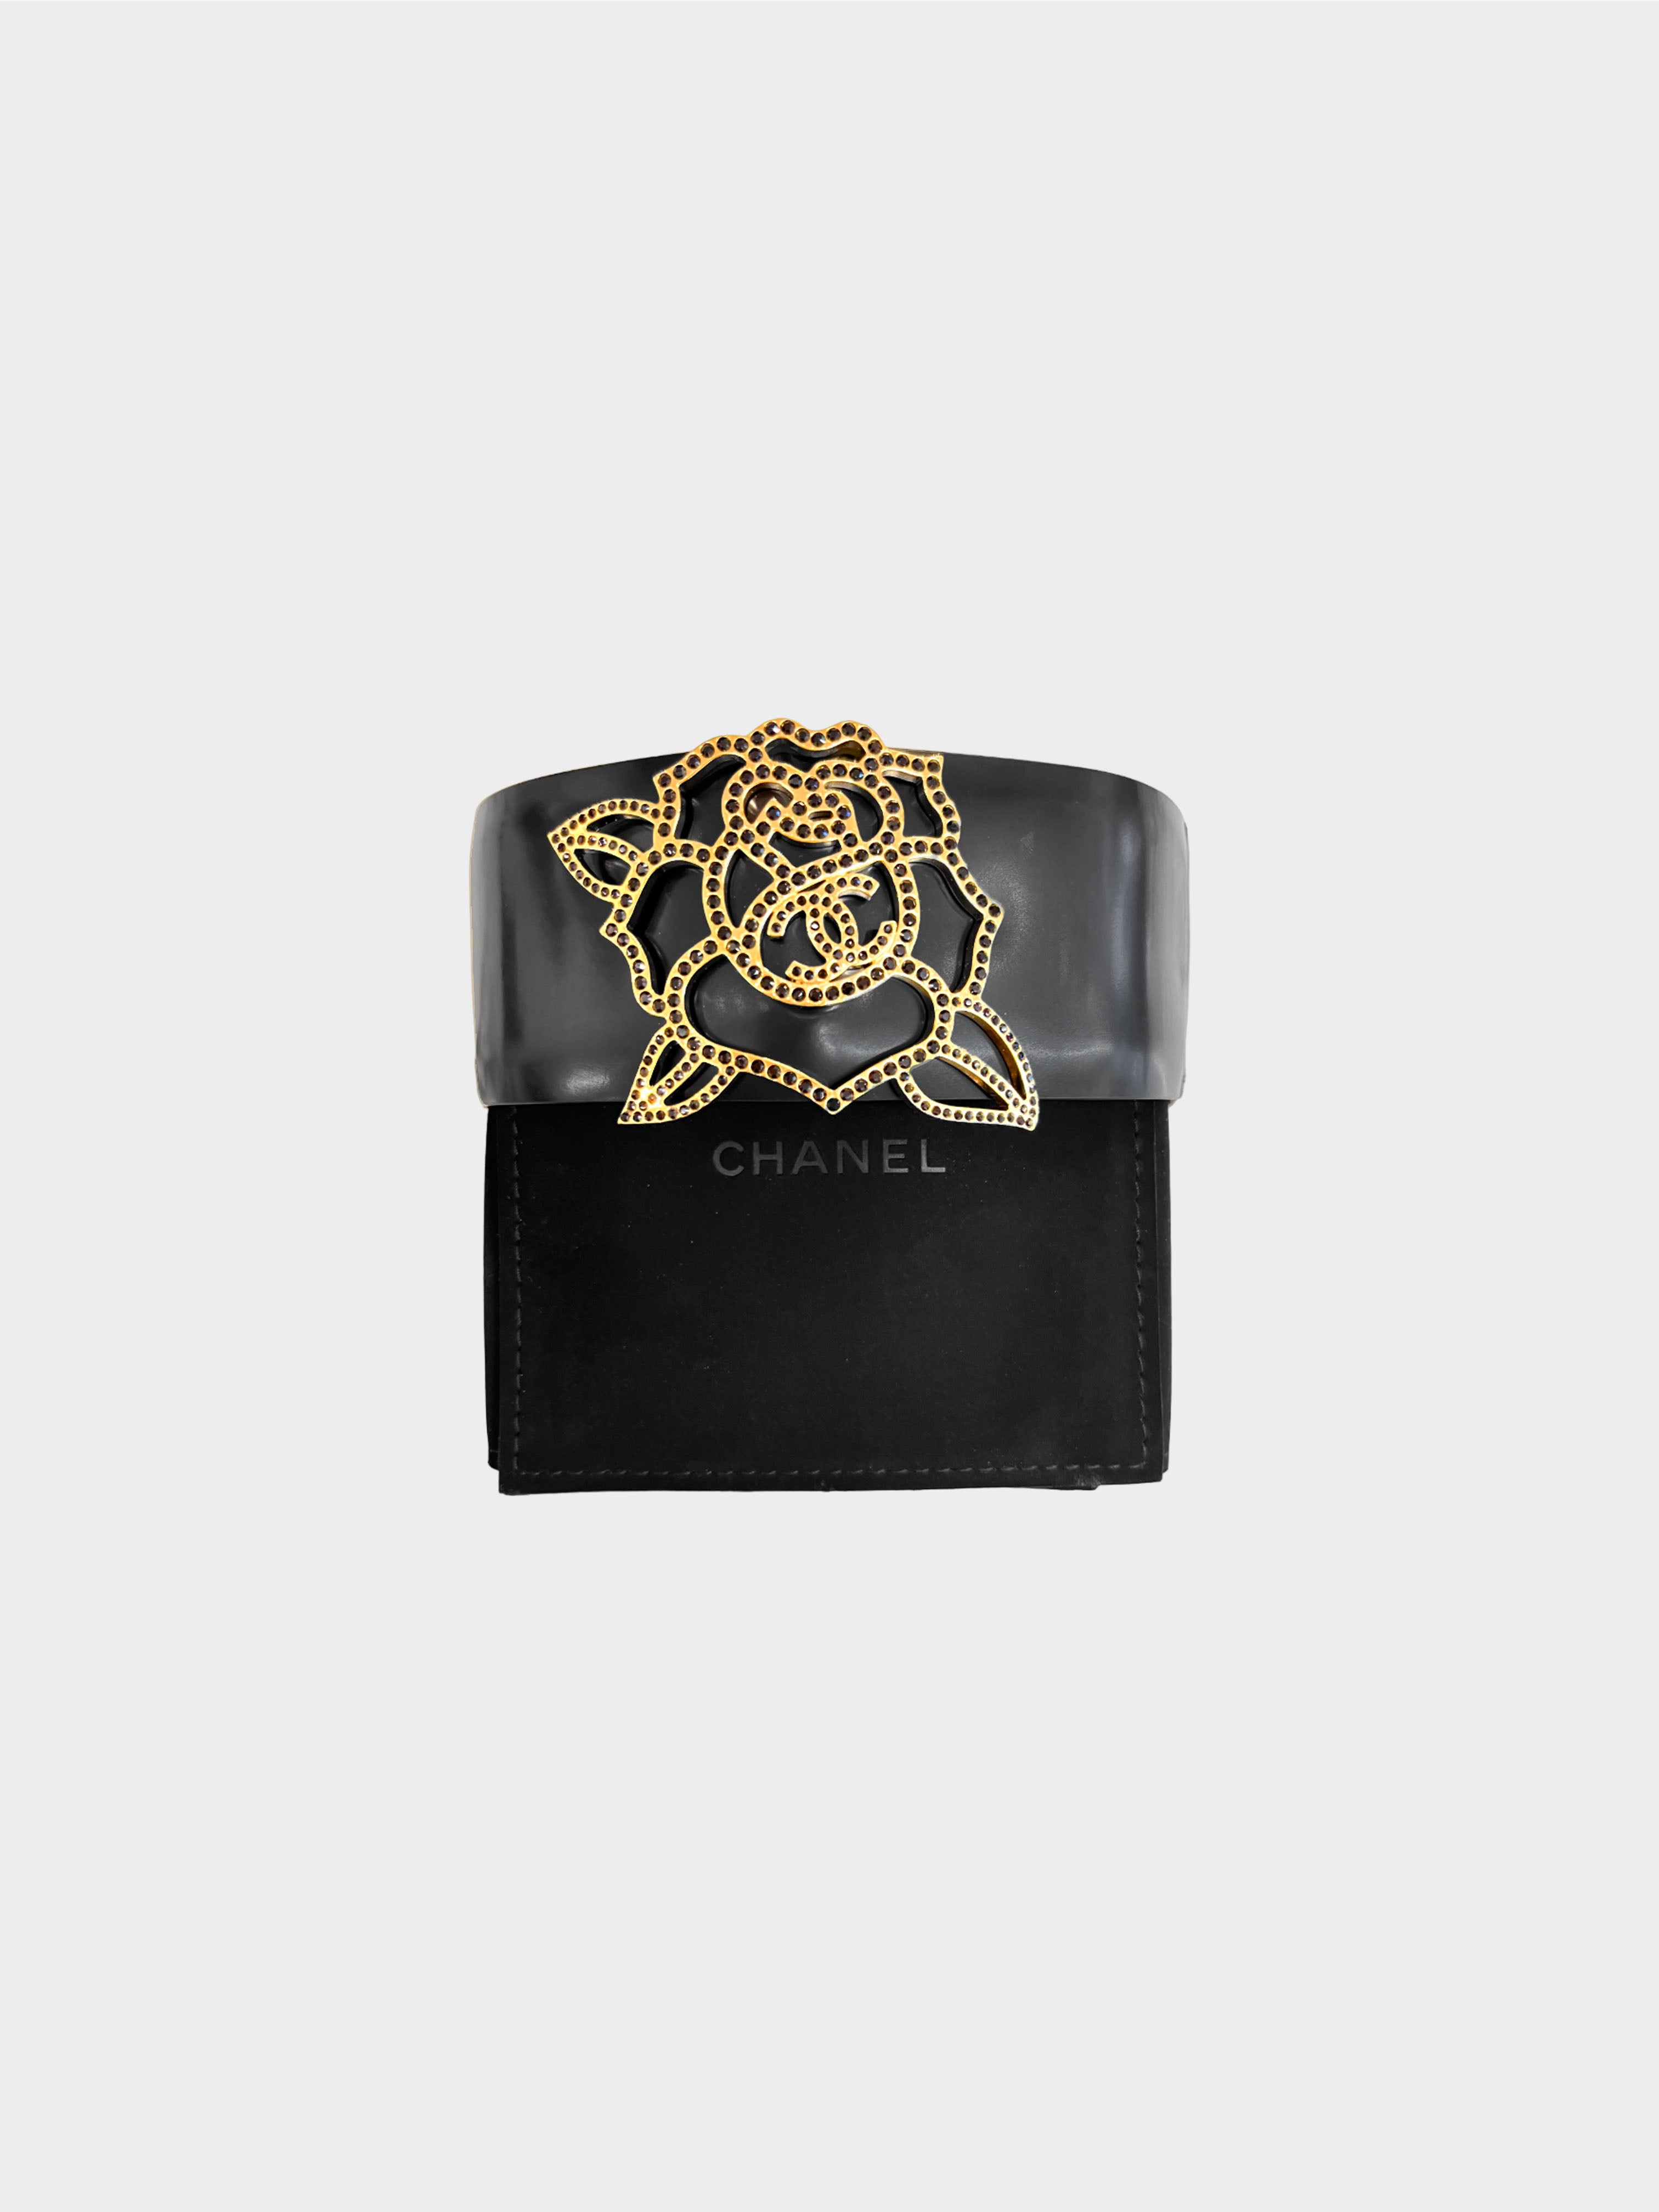 Chanel 2017 Black Rhinestone Camellia Leather Cuff Bracelet